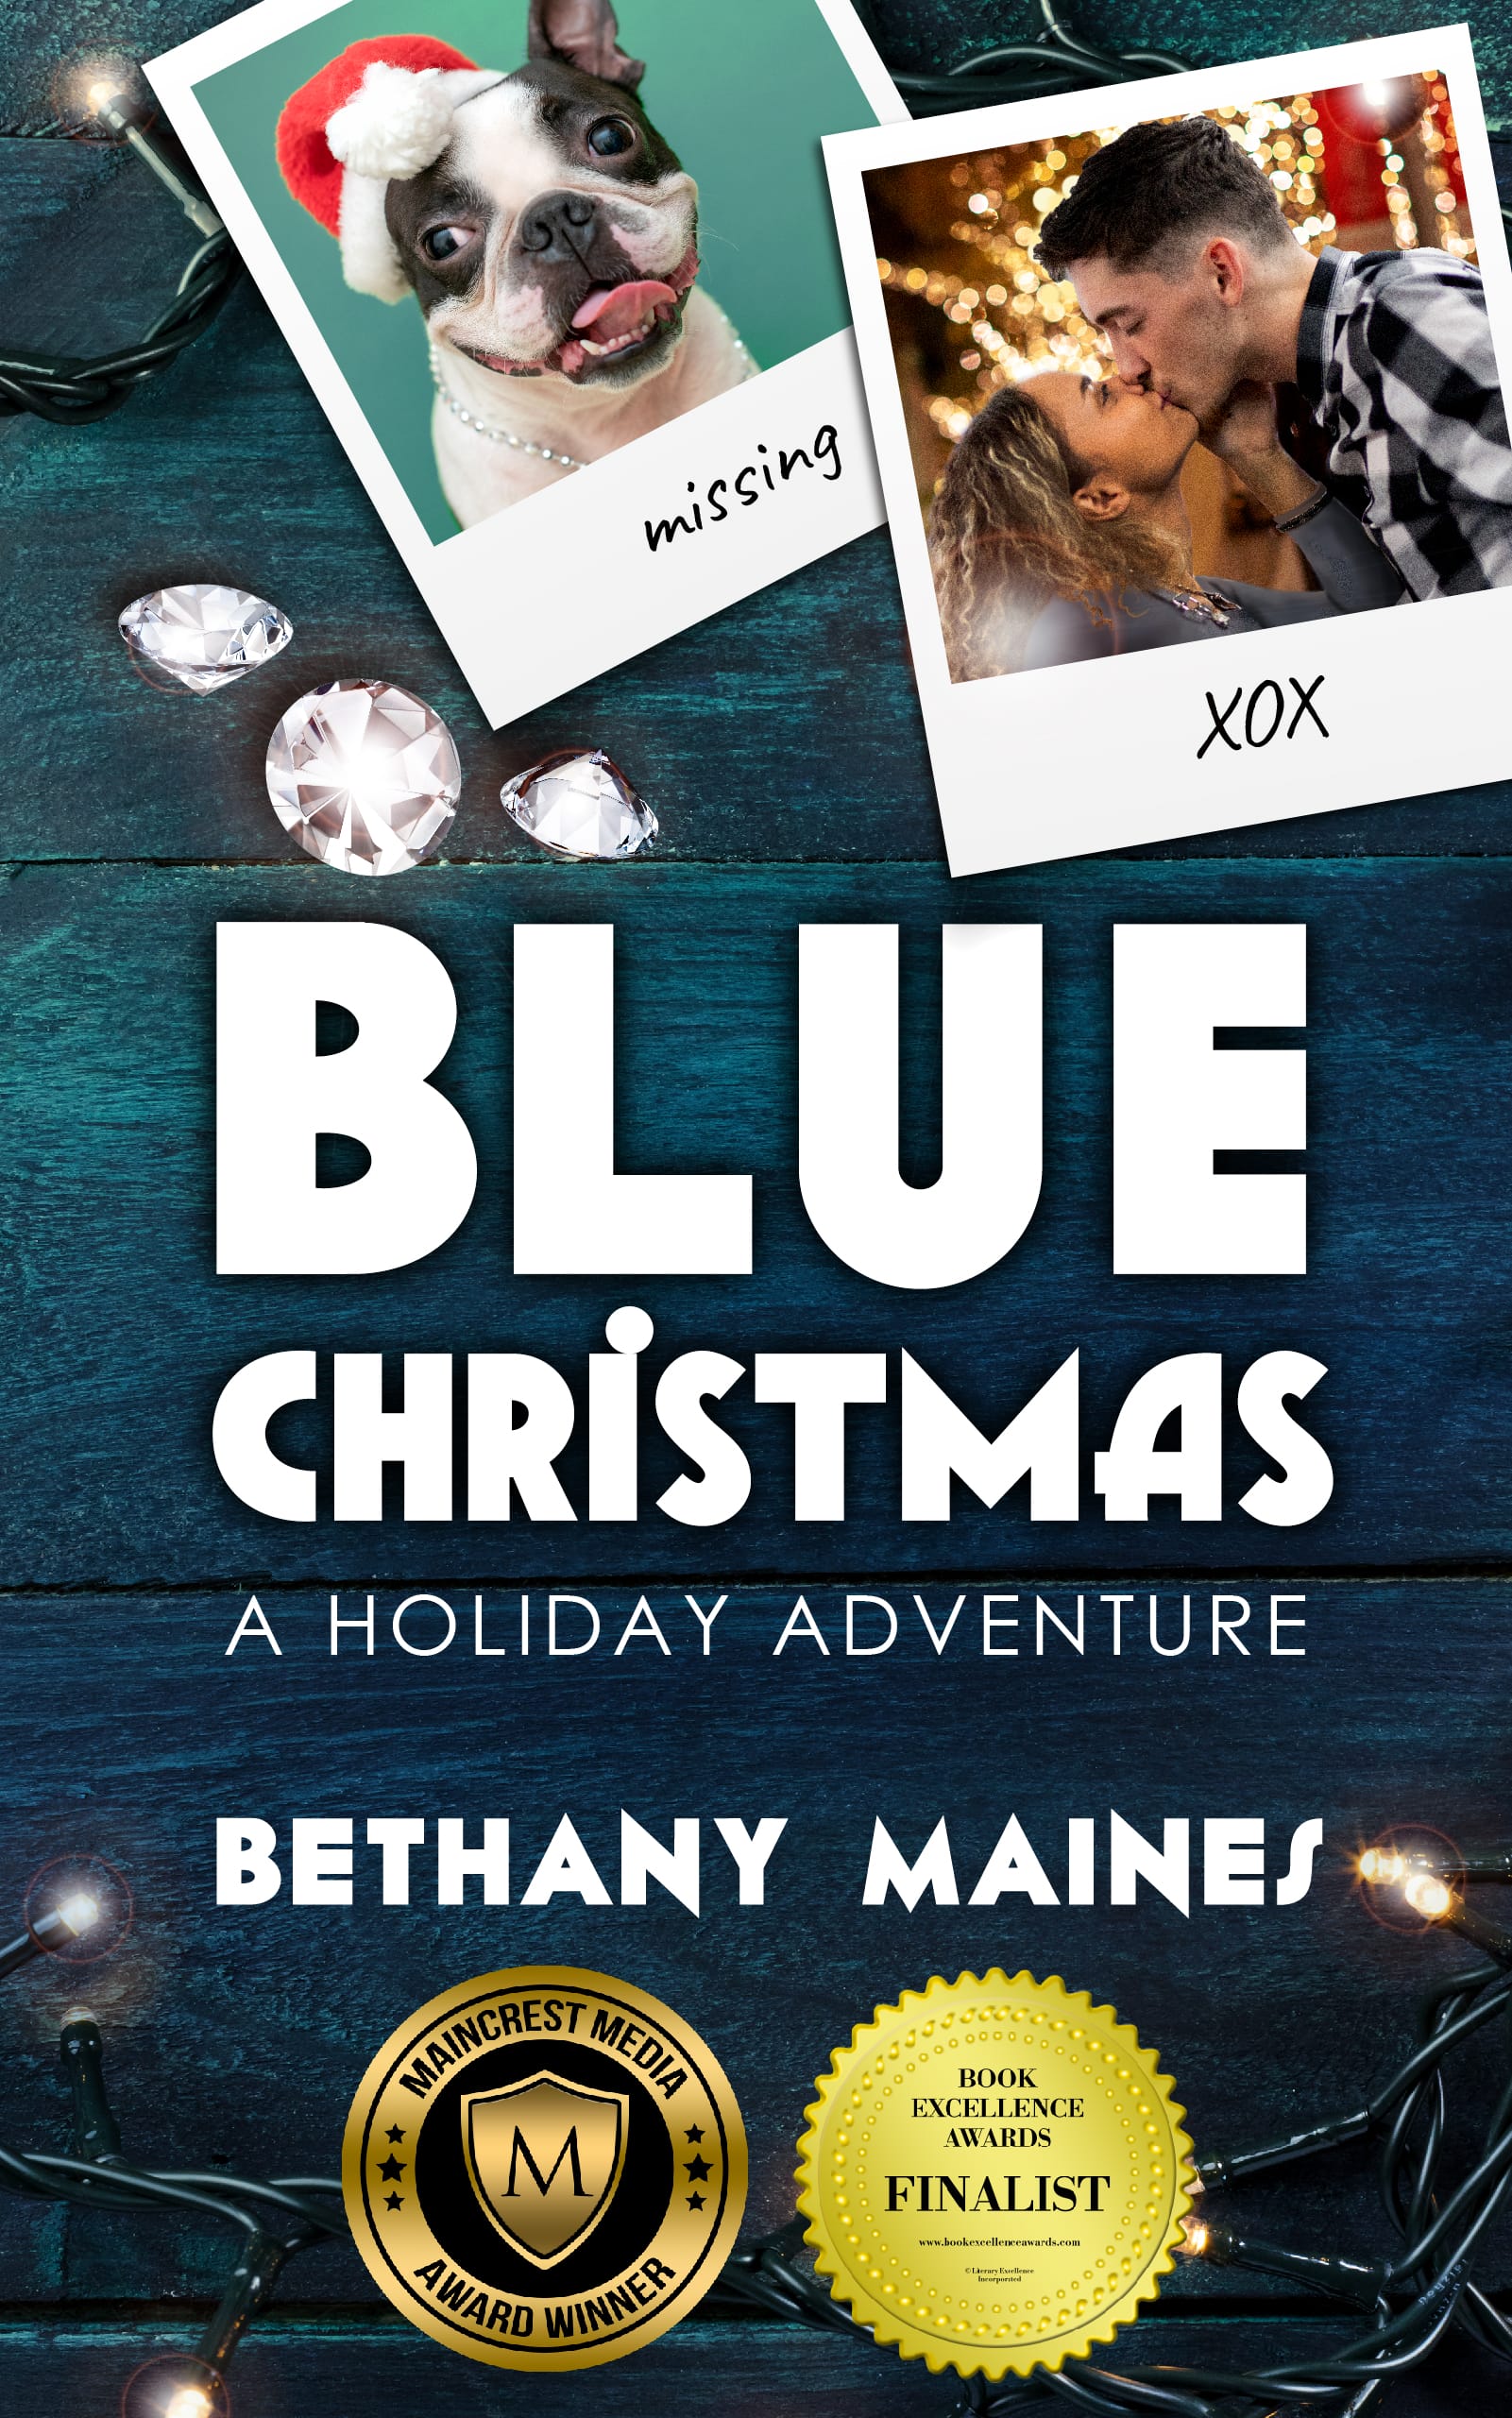 BlueChristmas-cover-2021_Kindle-1600×2560-1.jpg